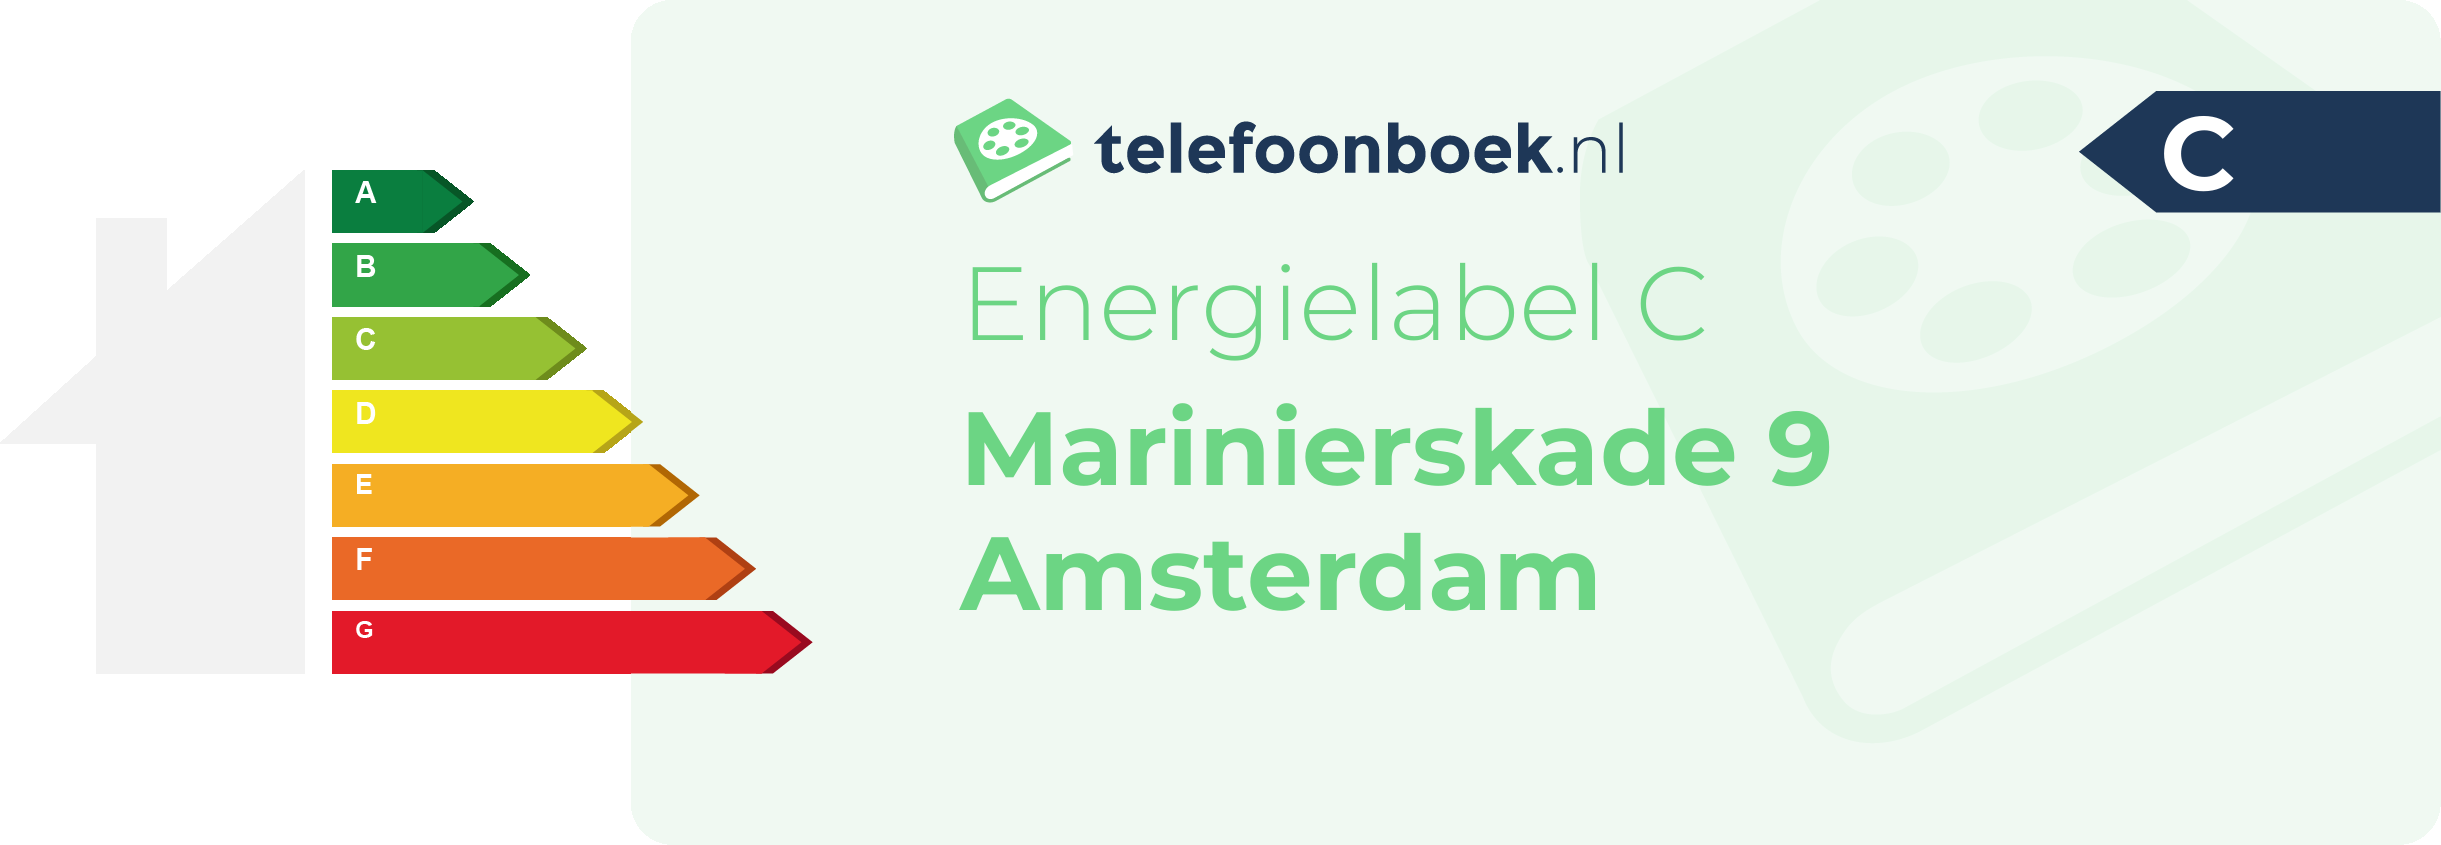 Energielabel Marinierskade 9 Amsterdam